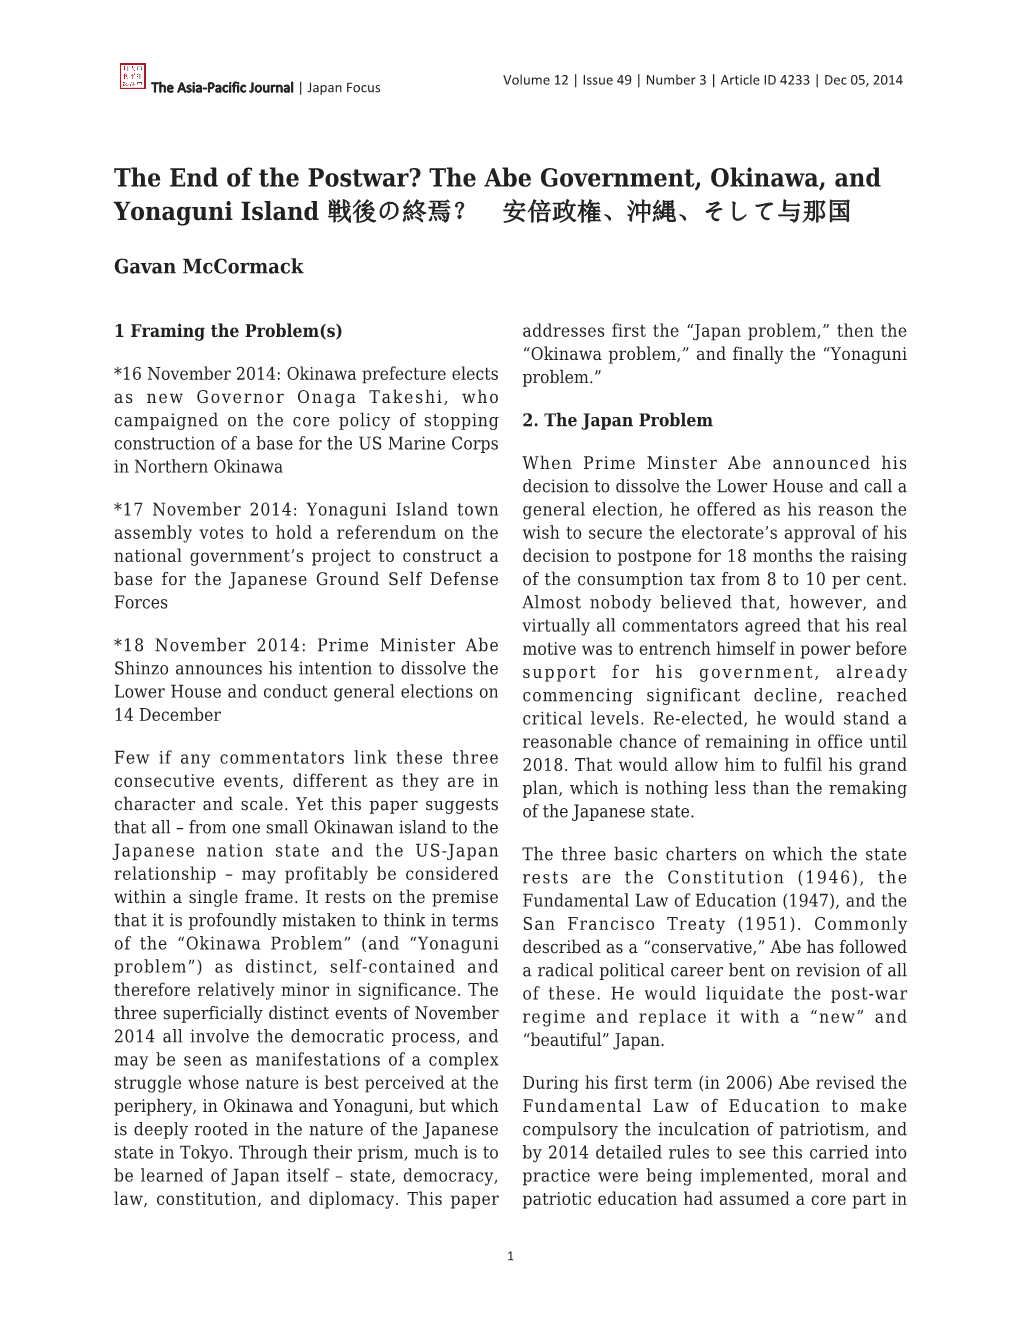 The End of the Postwar? the Abe Government, Okinawa, and Yonaguni Island 戦後の終焉？ 安倍政権、沖縄、そして与那国